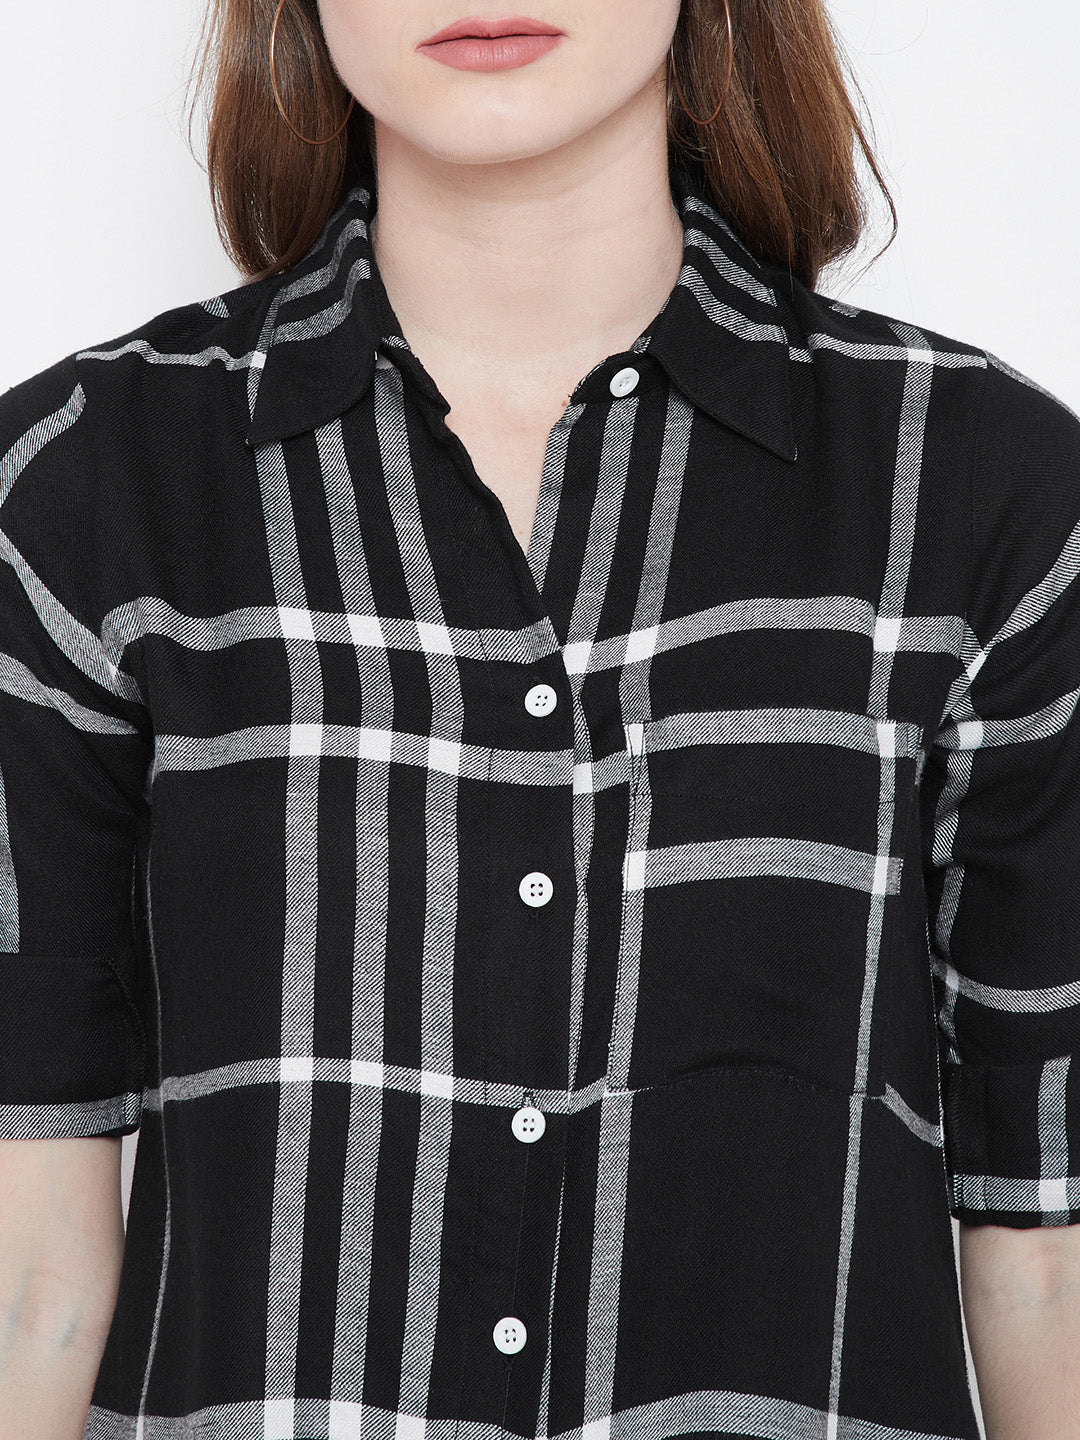 Black Checked Shirt Style Top - Berrylush